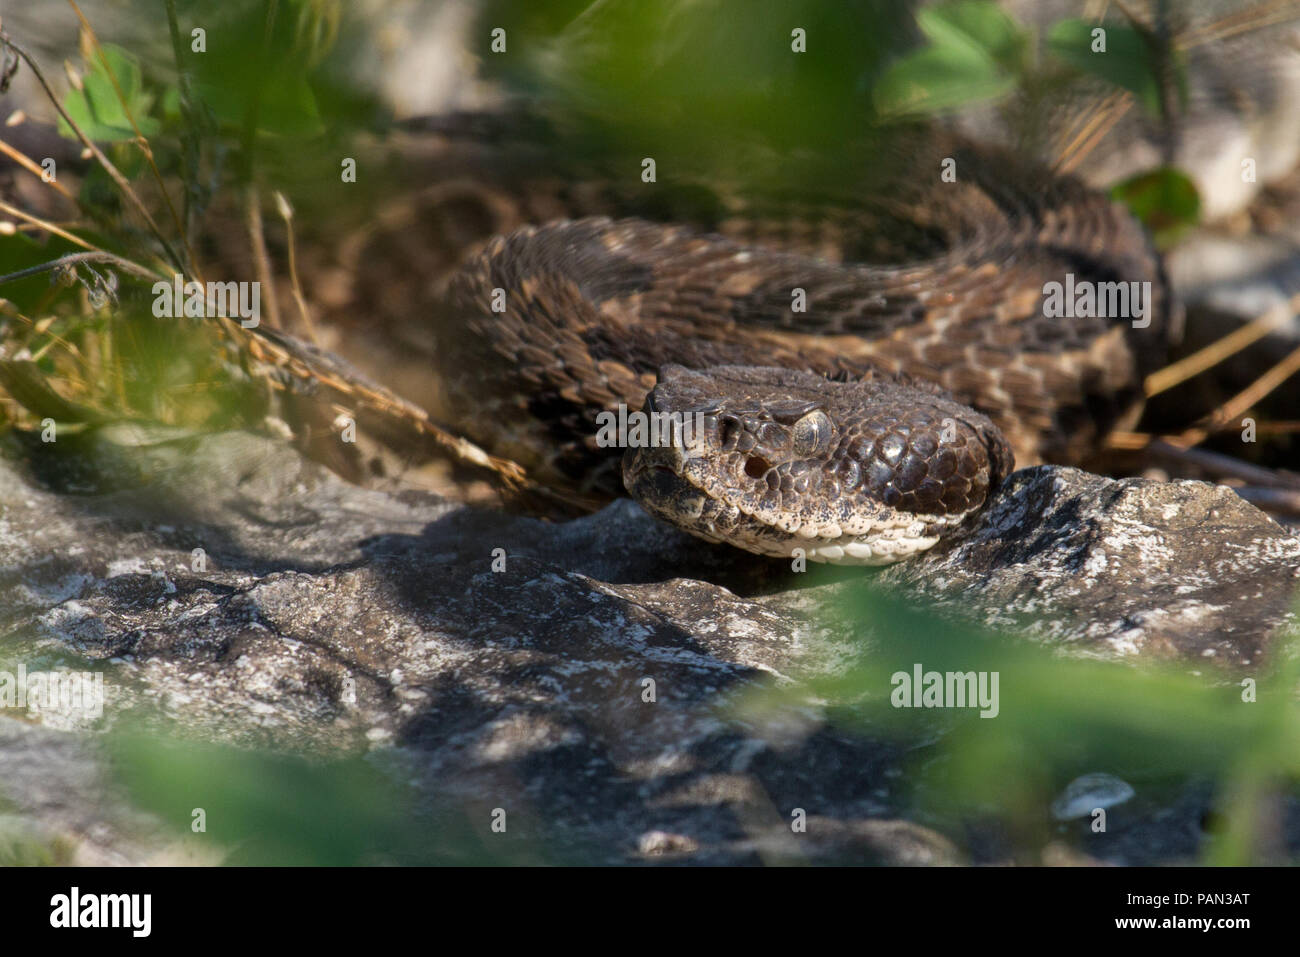 Frontal image of a canebrake rattlesnake, Crotalus horridus, showing heat sensing pits and nostrils. Stock Photo